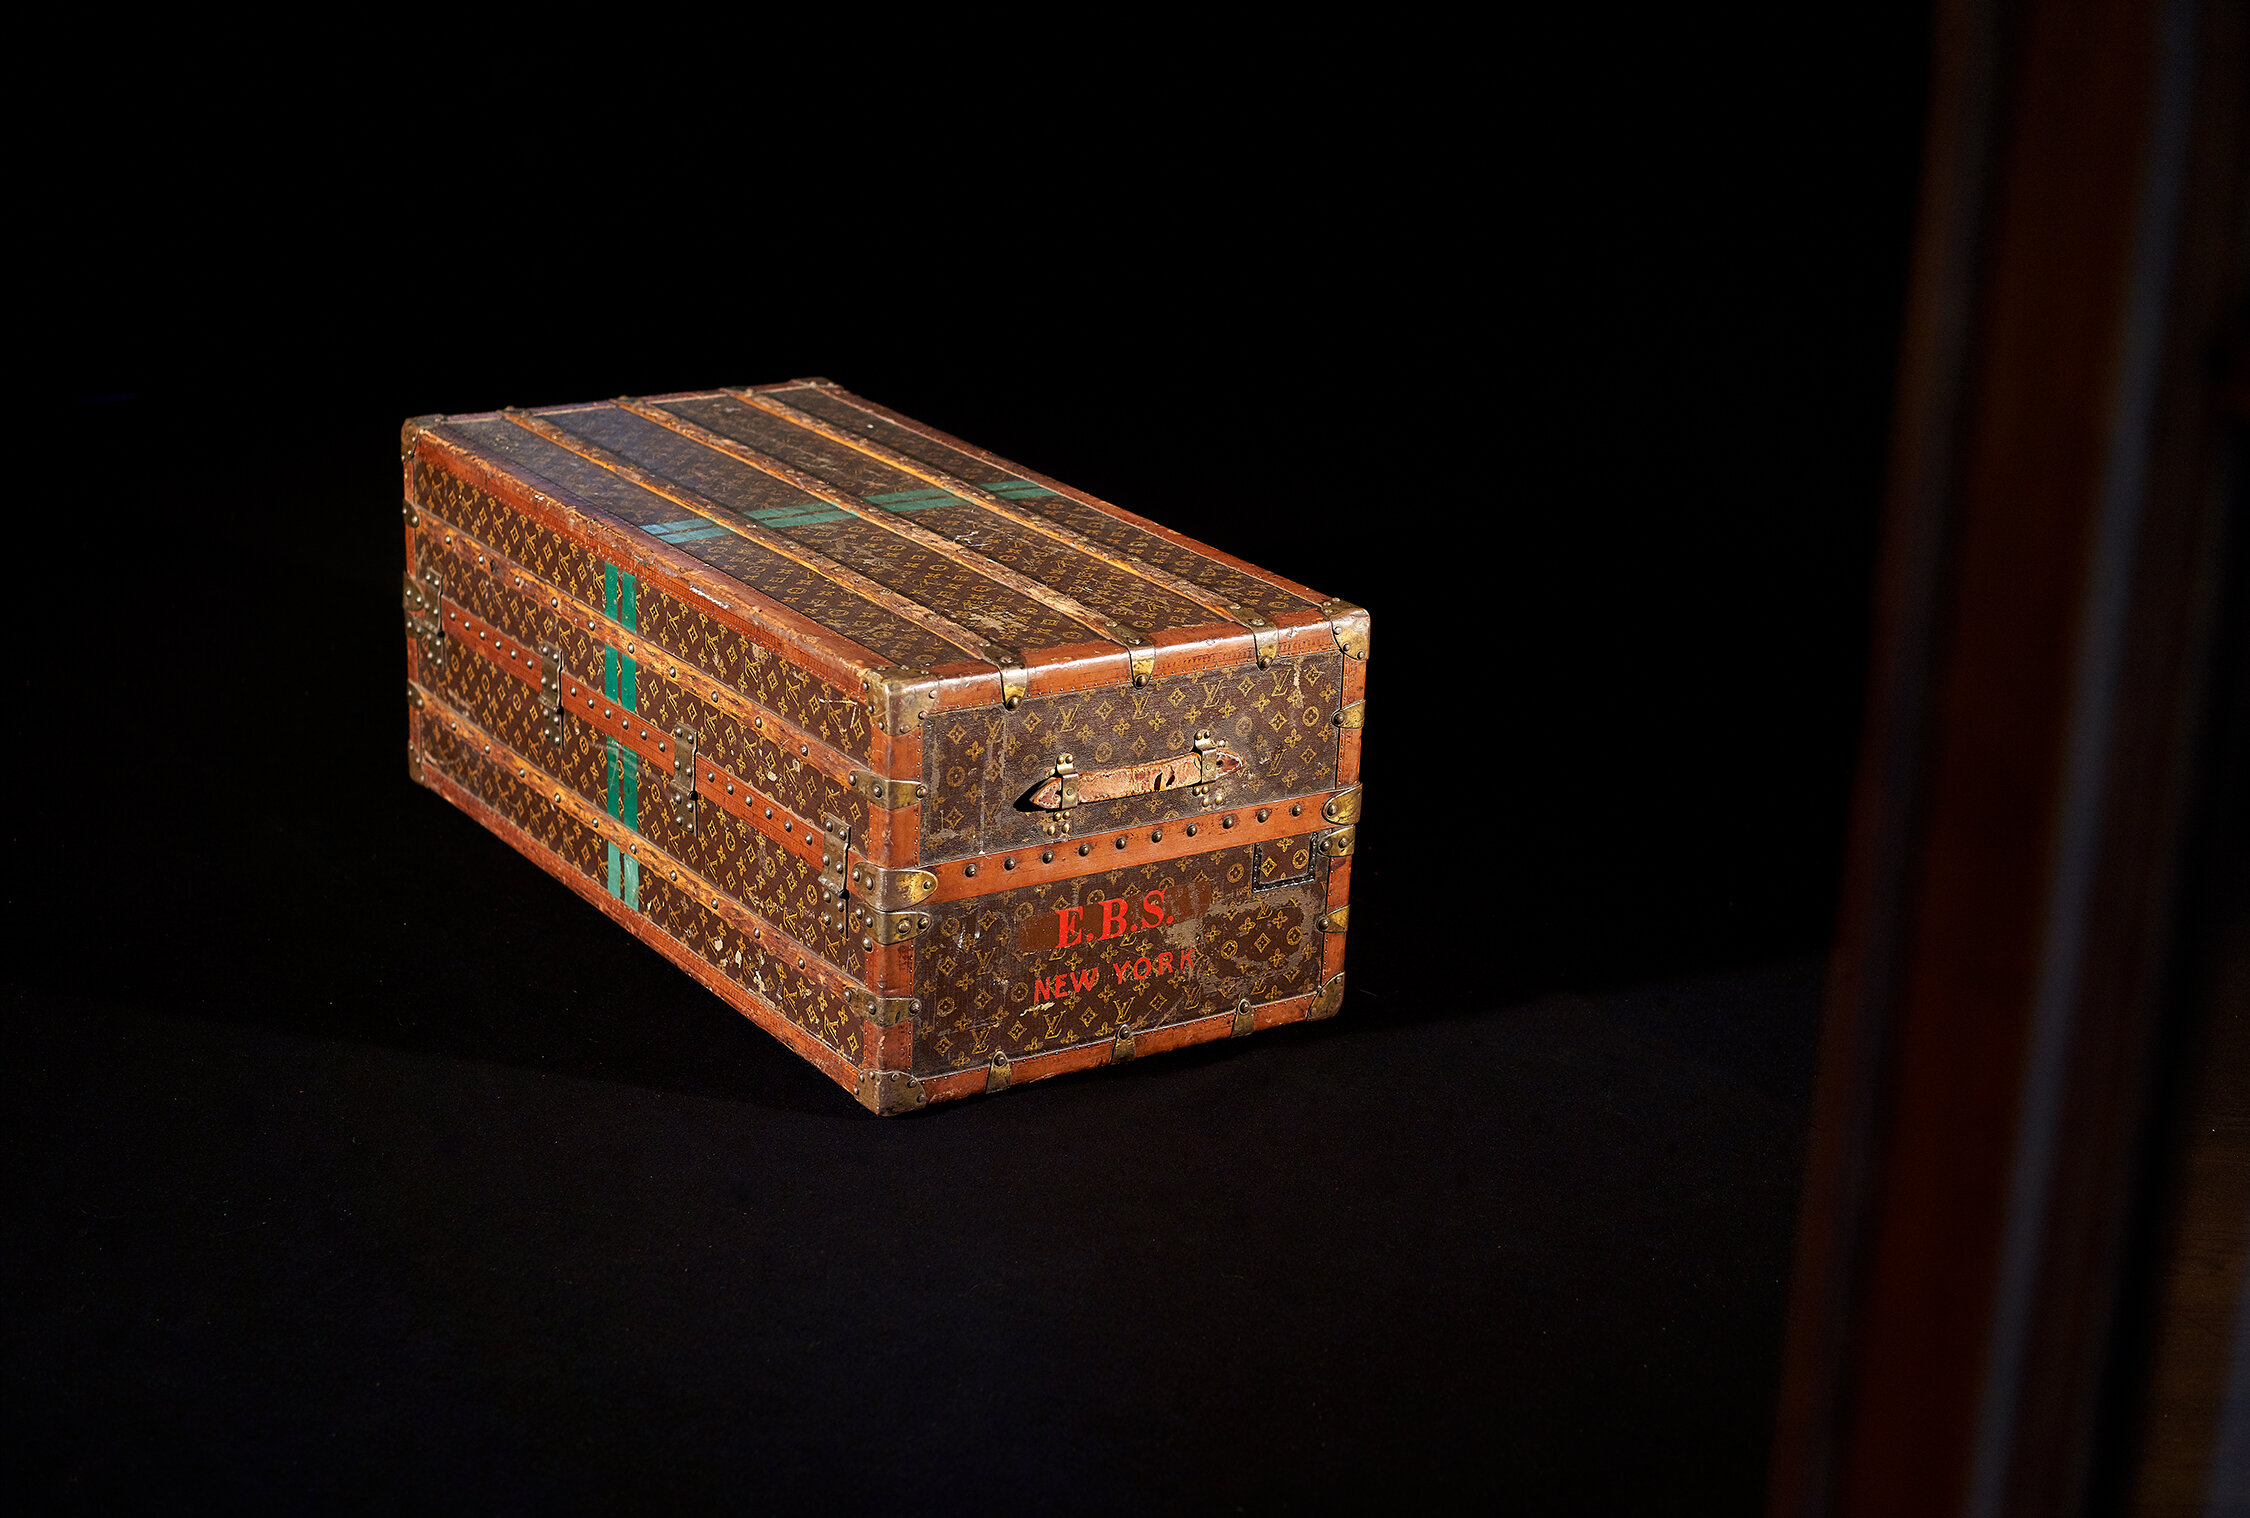 Louis Vuitton orange steamer trunk 1st série